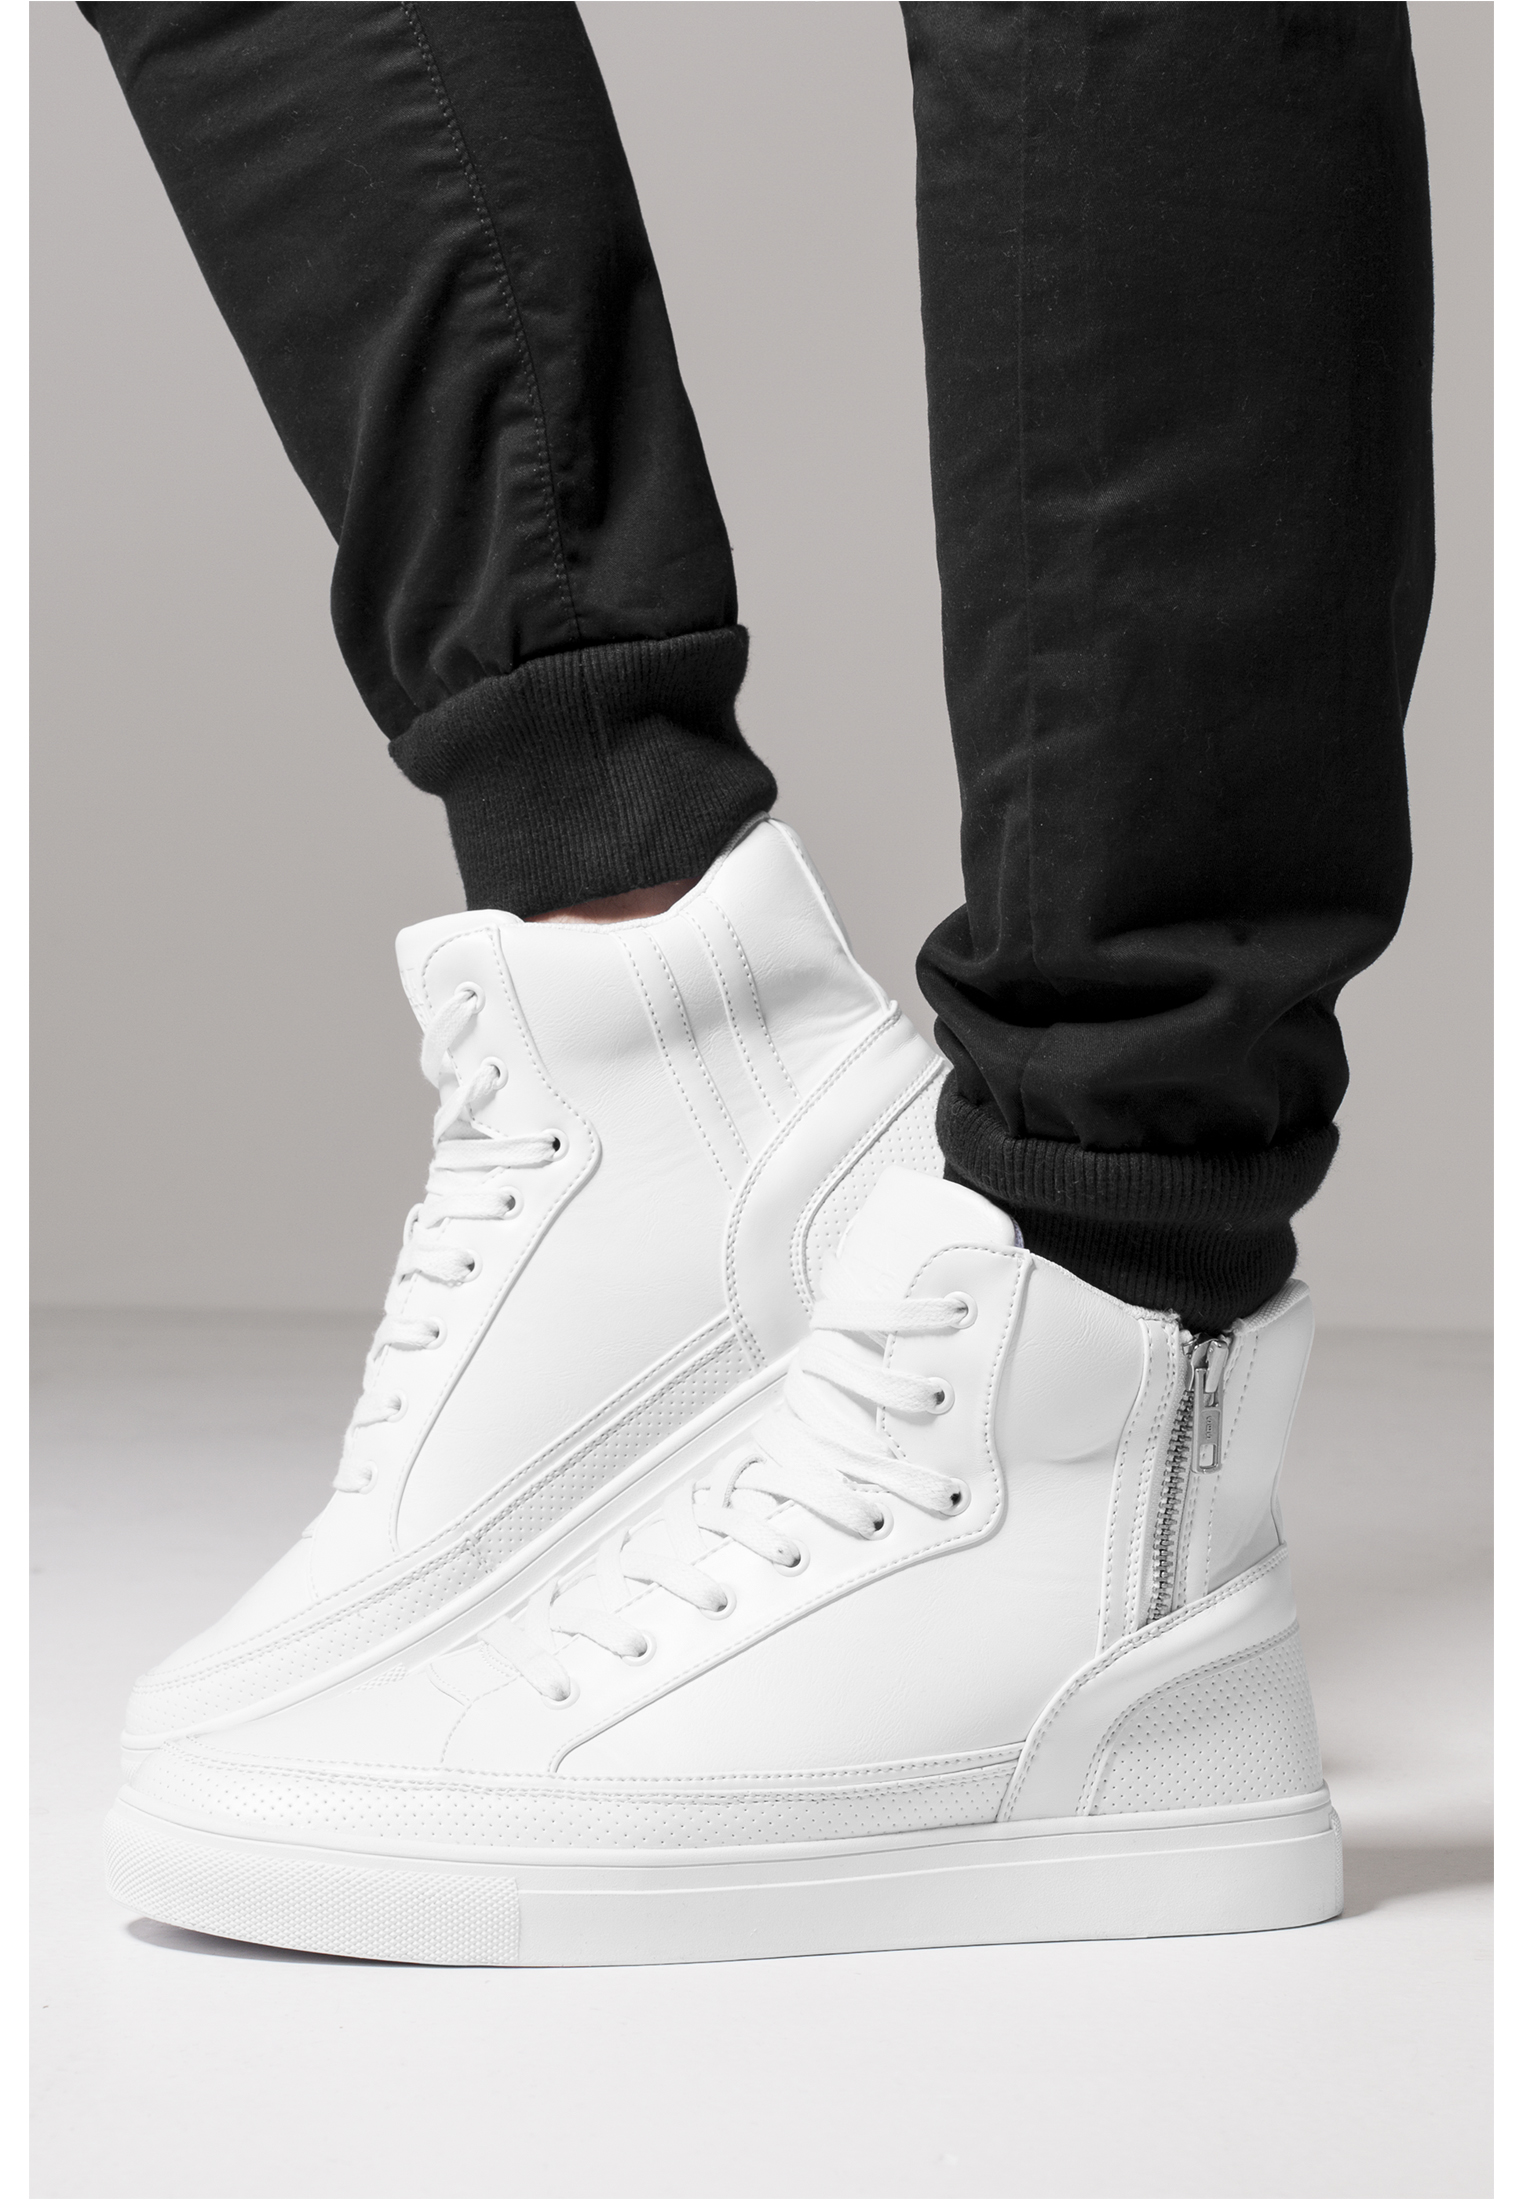 Men's Zipper High Top Sneakers - White